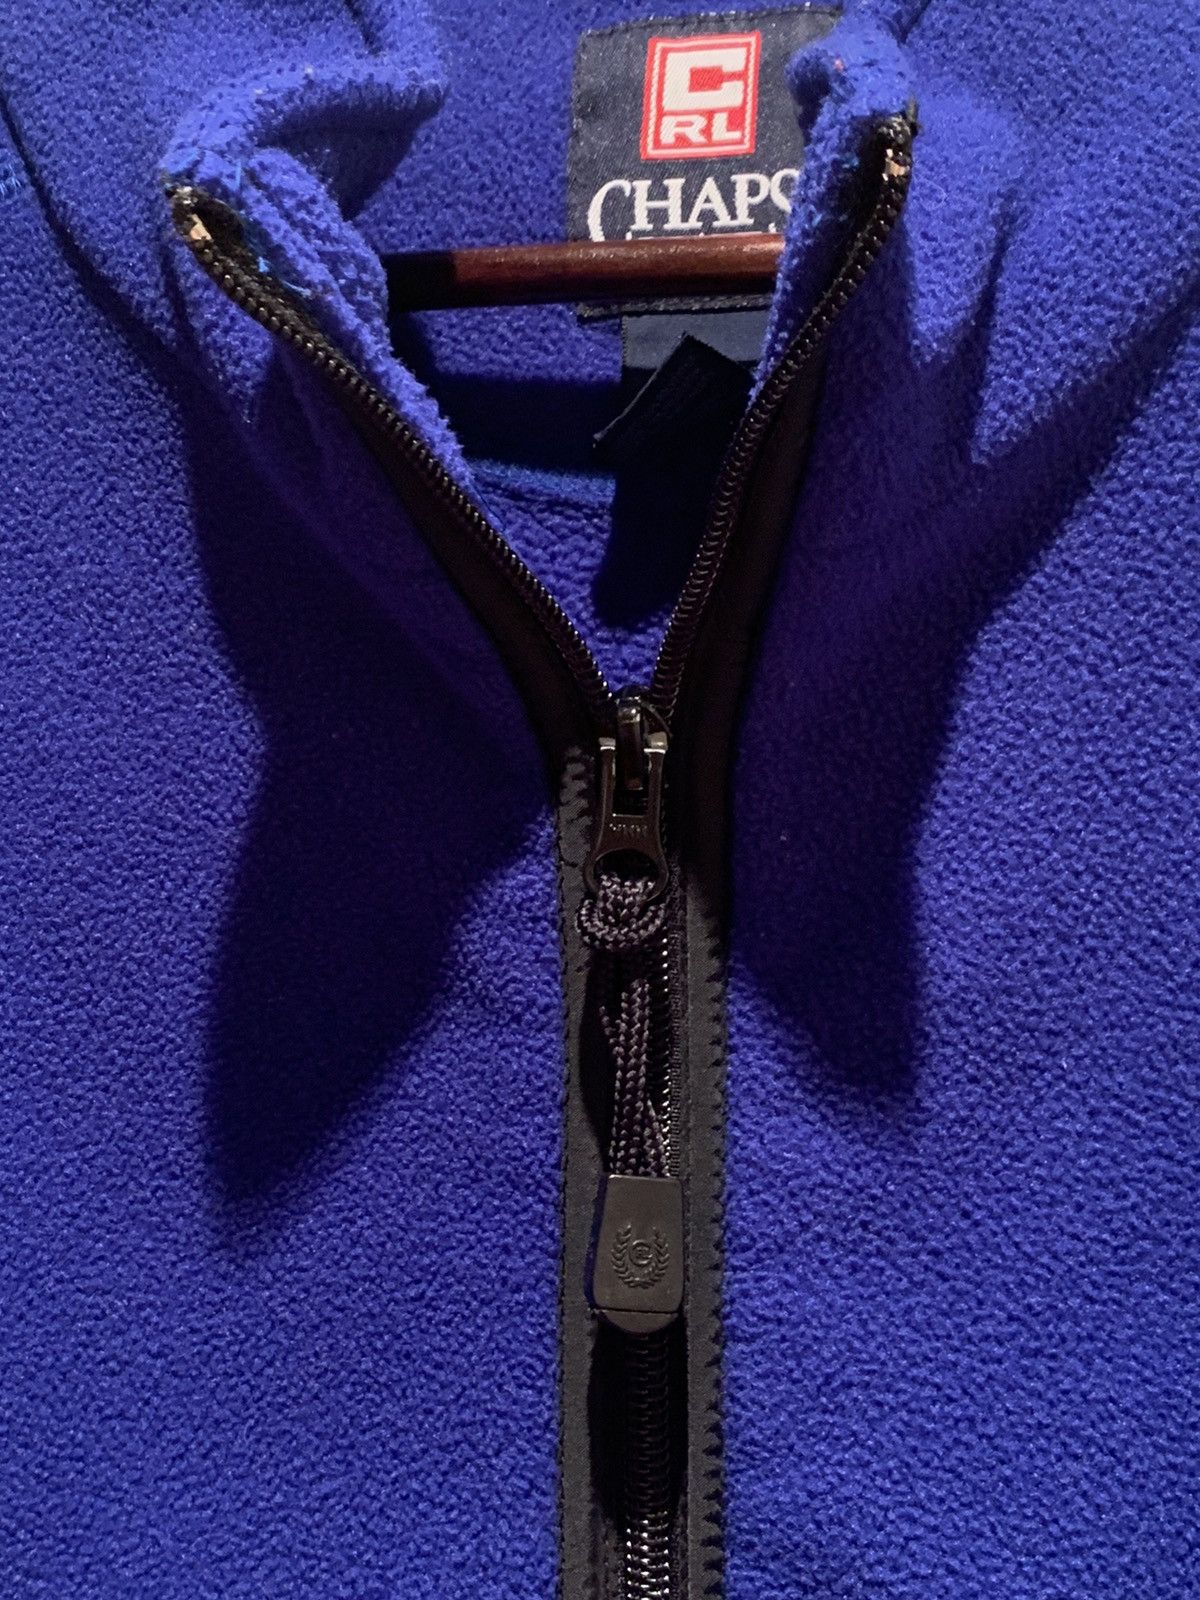 Ralph Lauren *RARE* Vintage Chaps x Ralph Lauren Fleece Zip-Up Jacket - L Size US L / EU 52-54 / 3 - 7 Thumbnail